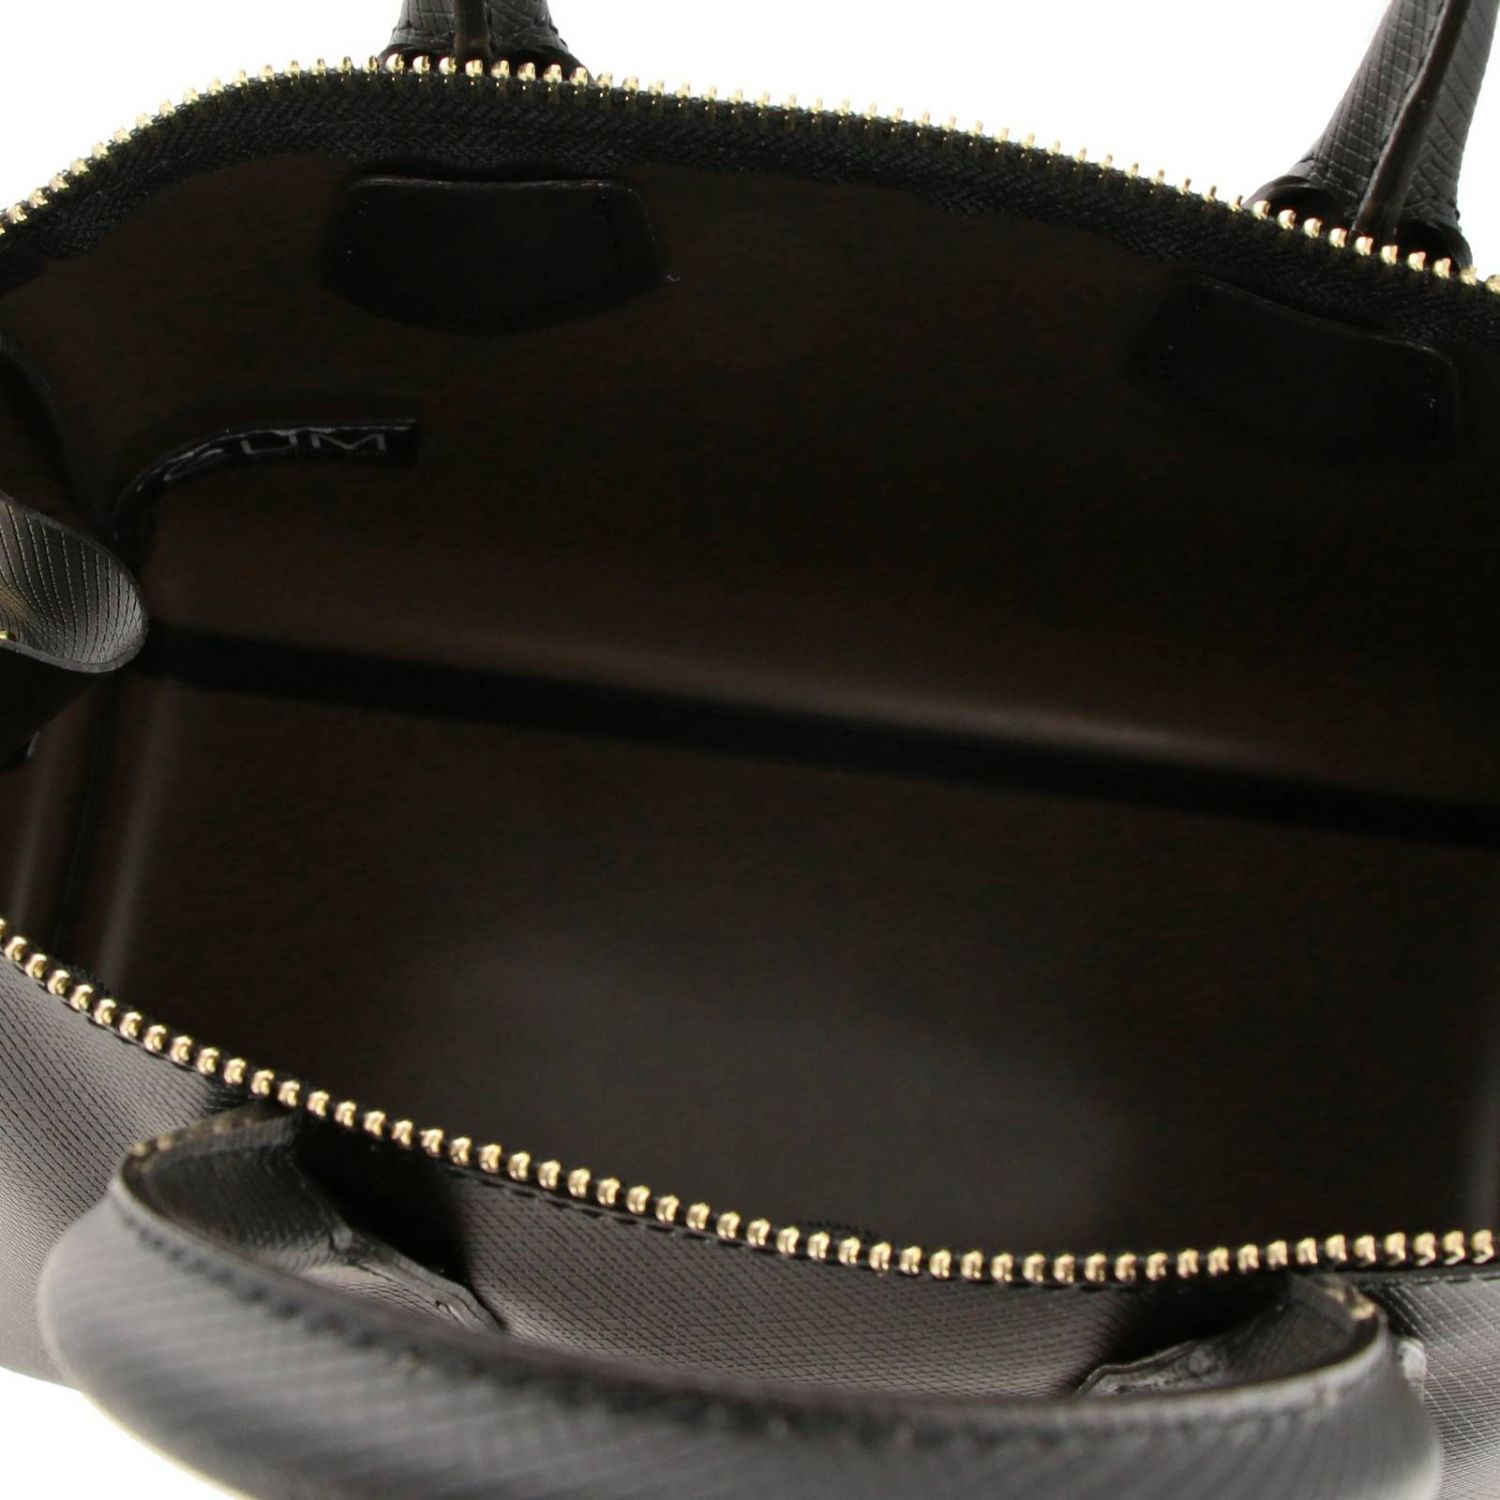 brush friction satellite Gum Outlet: handbag for woman - Black | Gum handbag BS 1900T SATIN STUD  online on GIGLIO.COM